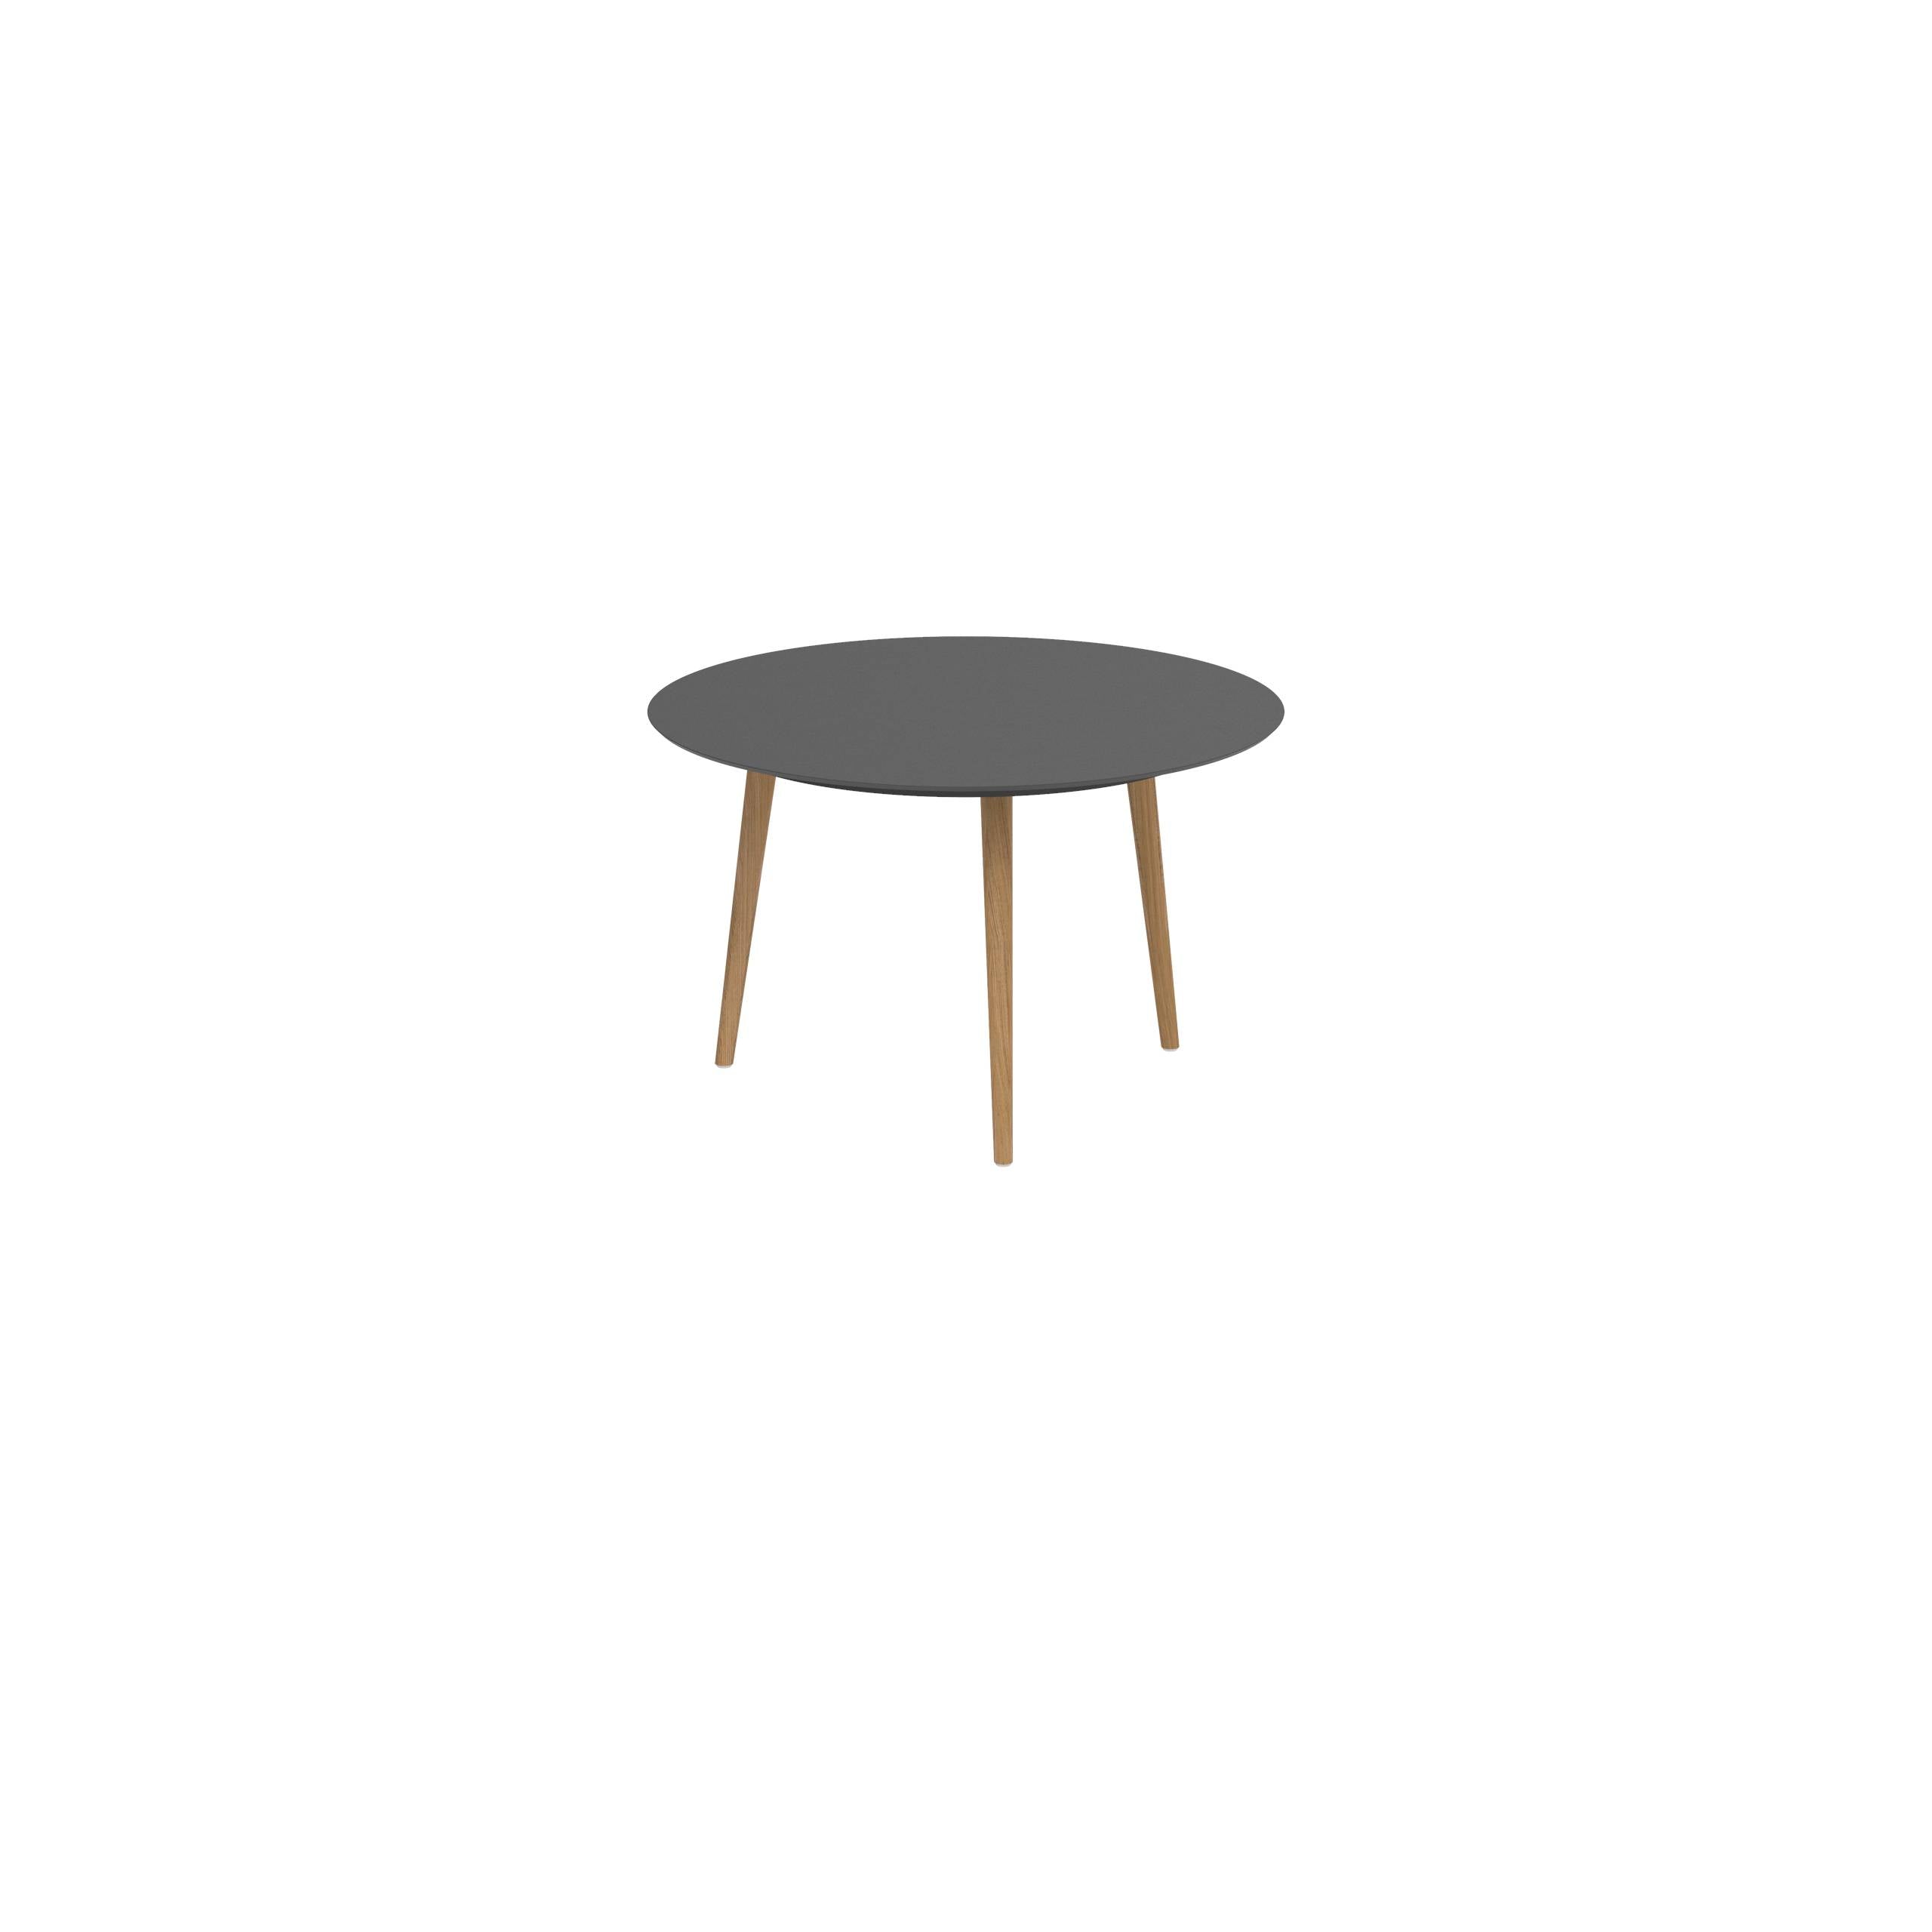 Styletto Standard Dining Table Ø 120cm Teak Legs Ceramic Top Black